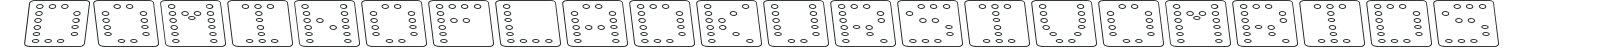 Domino flad kursiv omrids preview